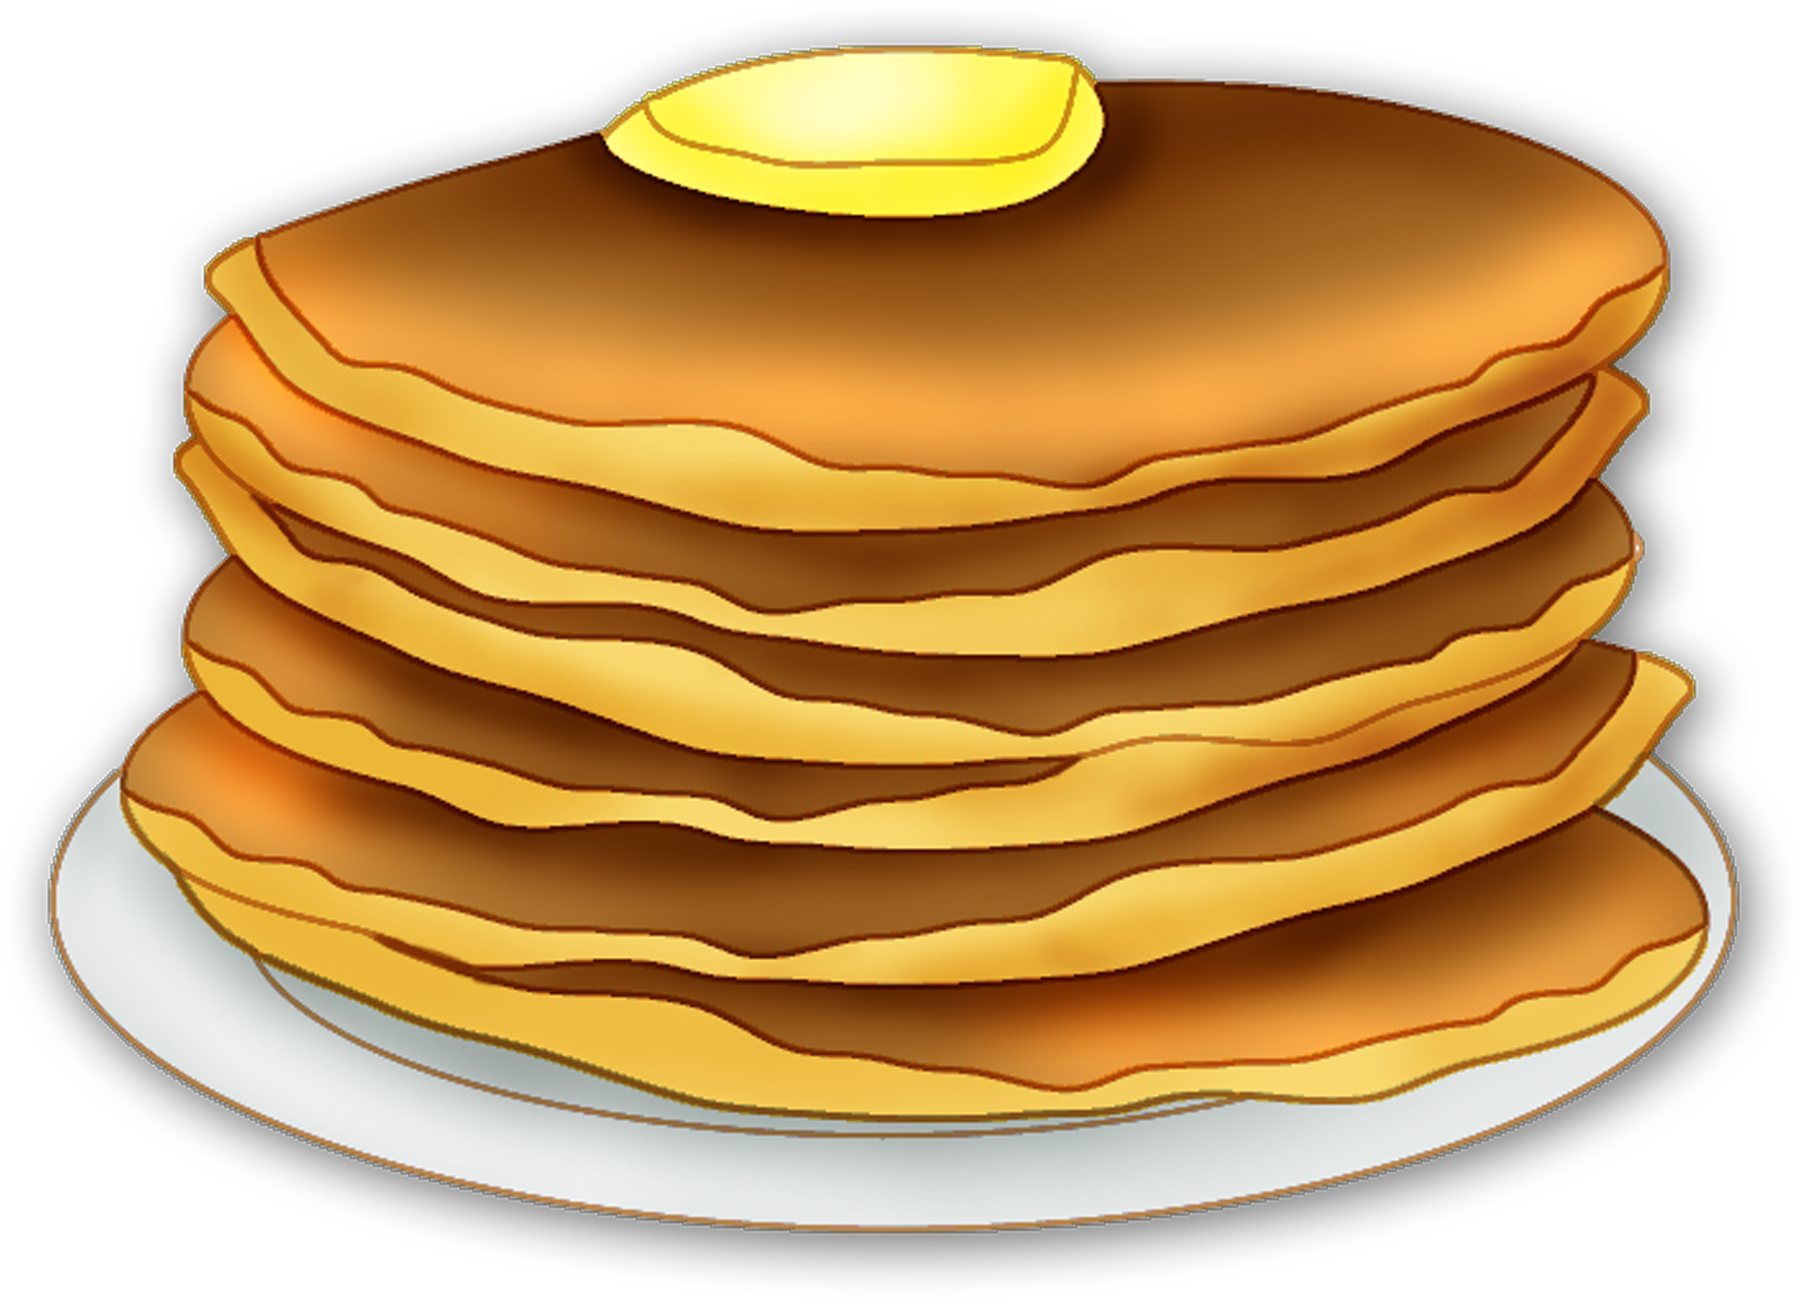 pancake clipart